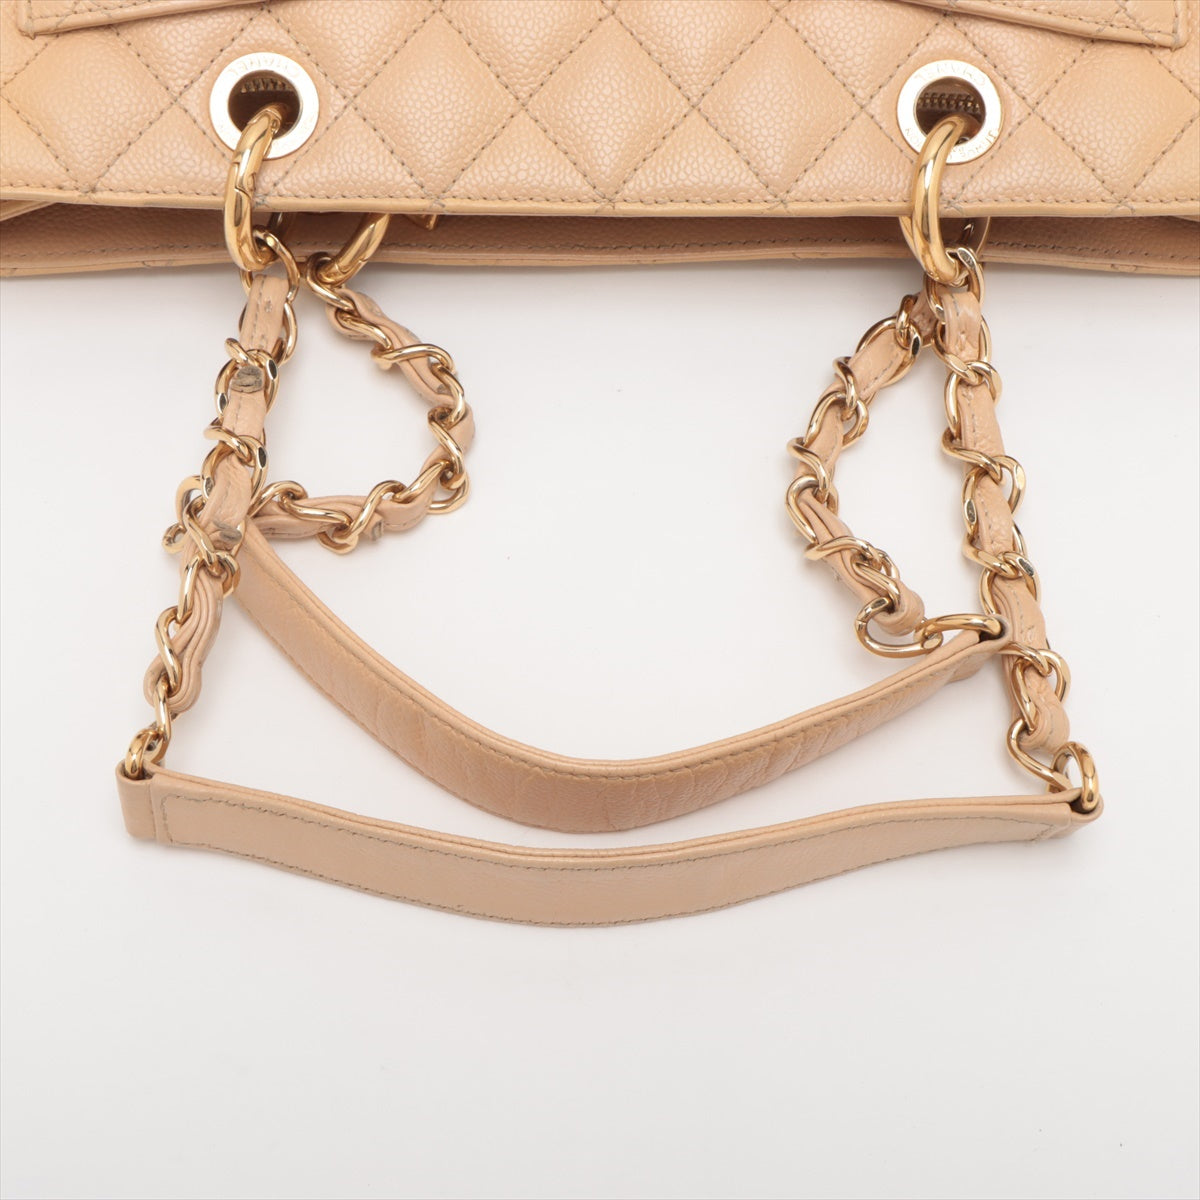 Chanel GST Caviar Skin Chain Tote Bag Beige Gold Metal Fittings 18XXXXXX